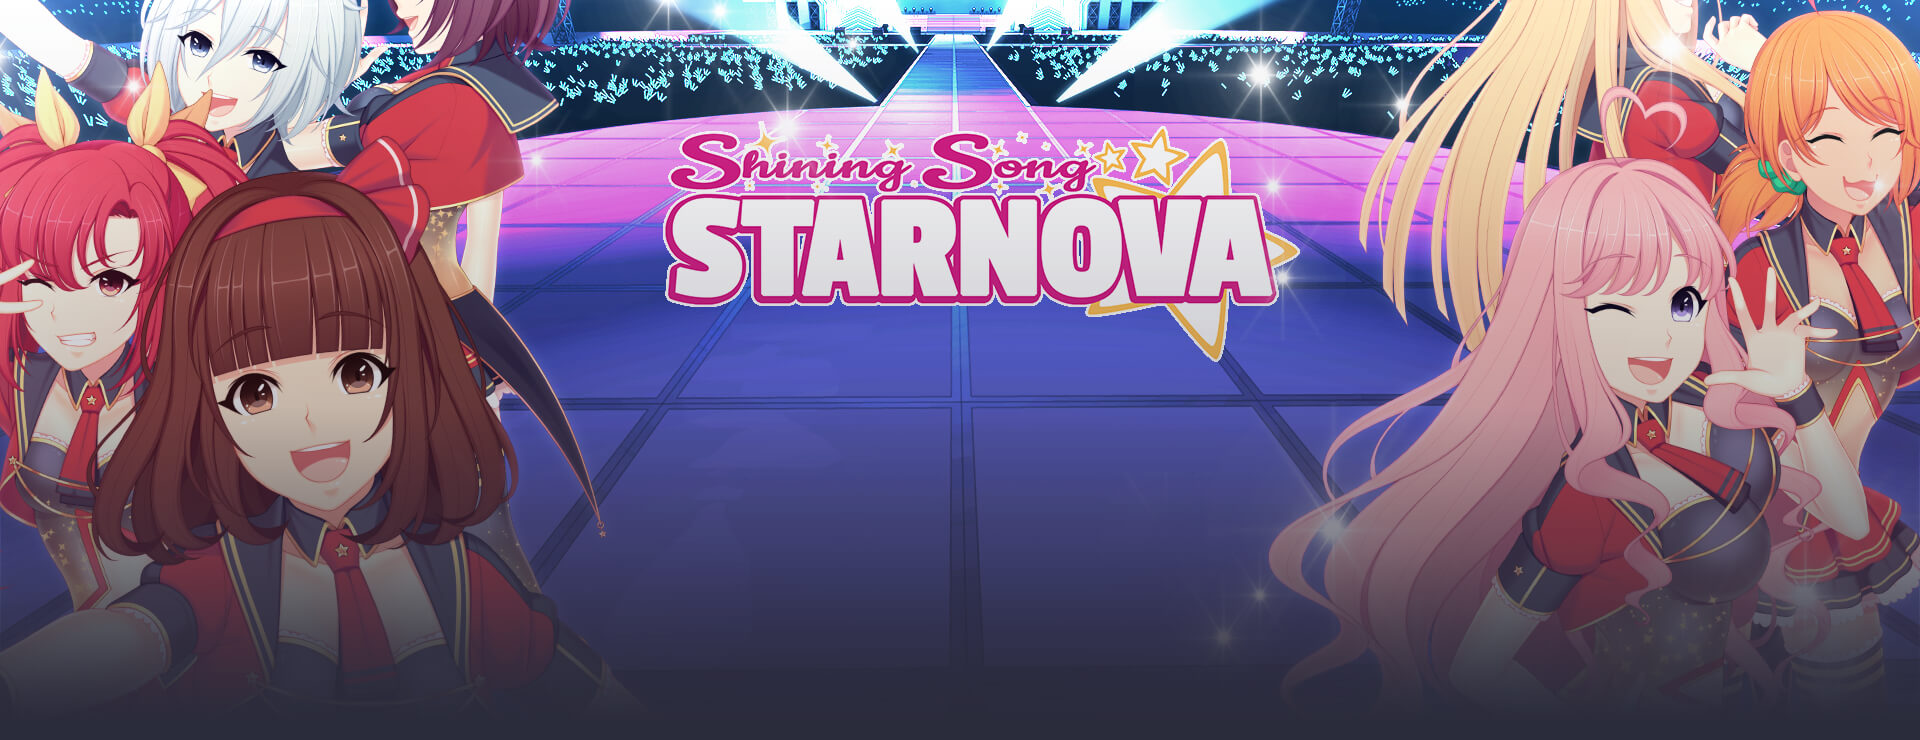 Shining Song Starnova - Japanisches Adventure Spiel